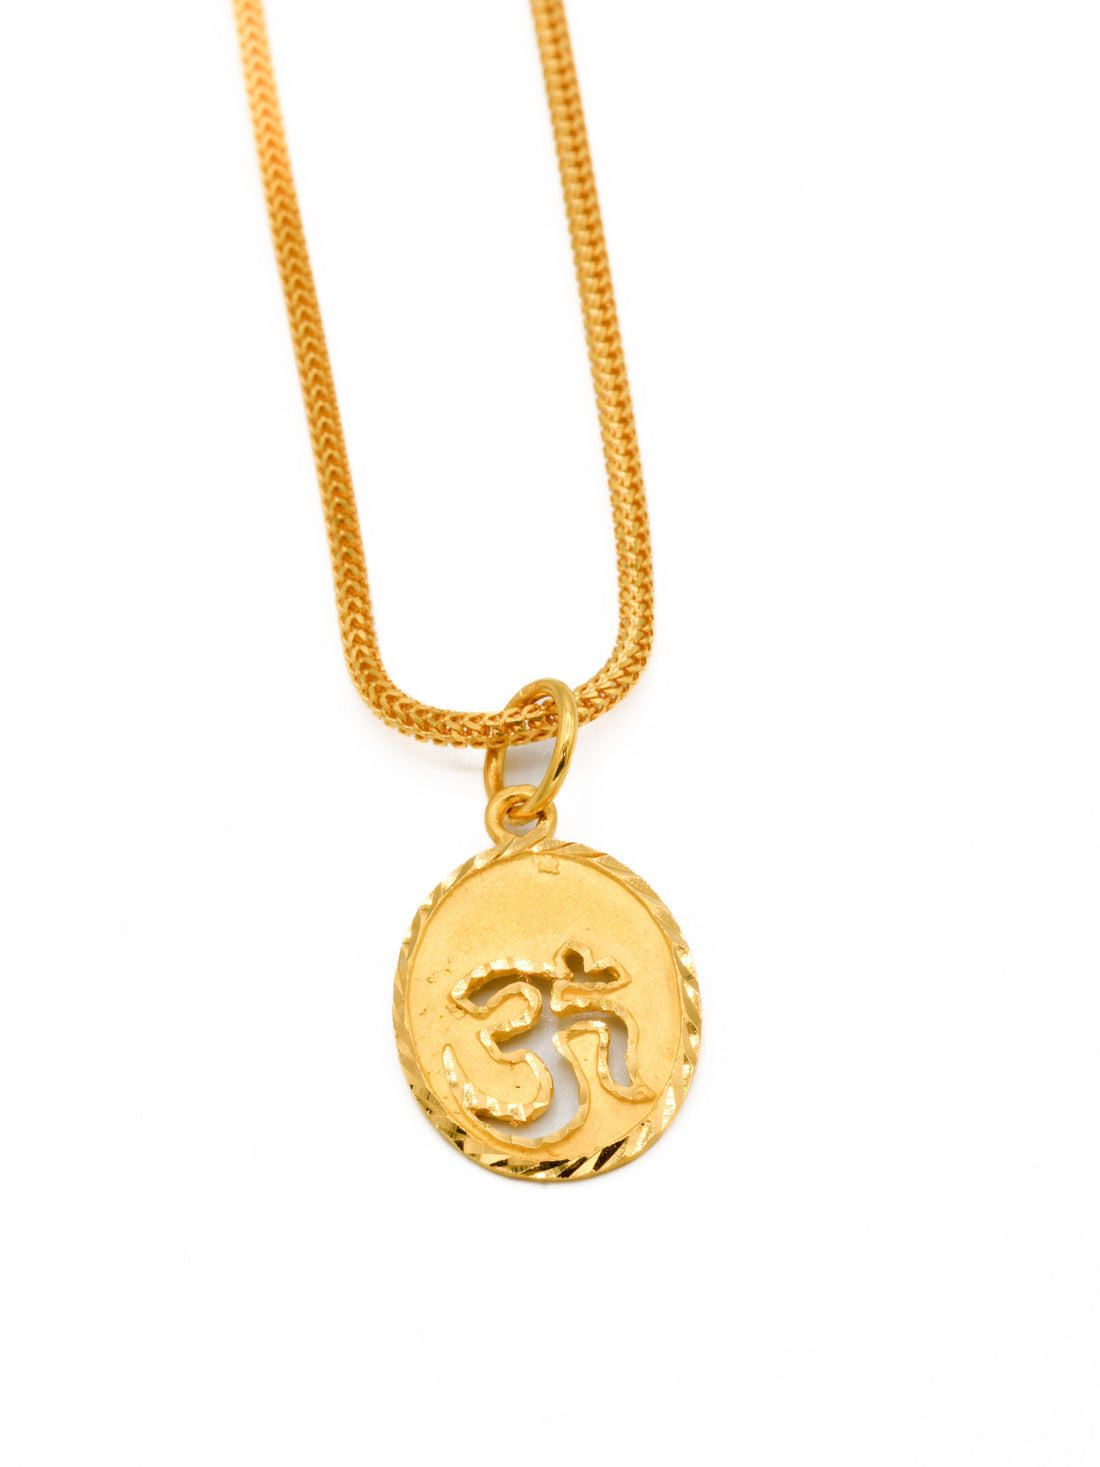 22ct Gold Om Pendant - Roop Darshan